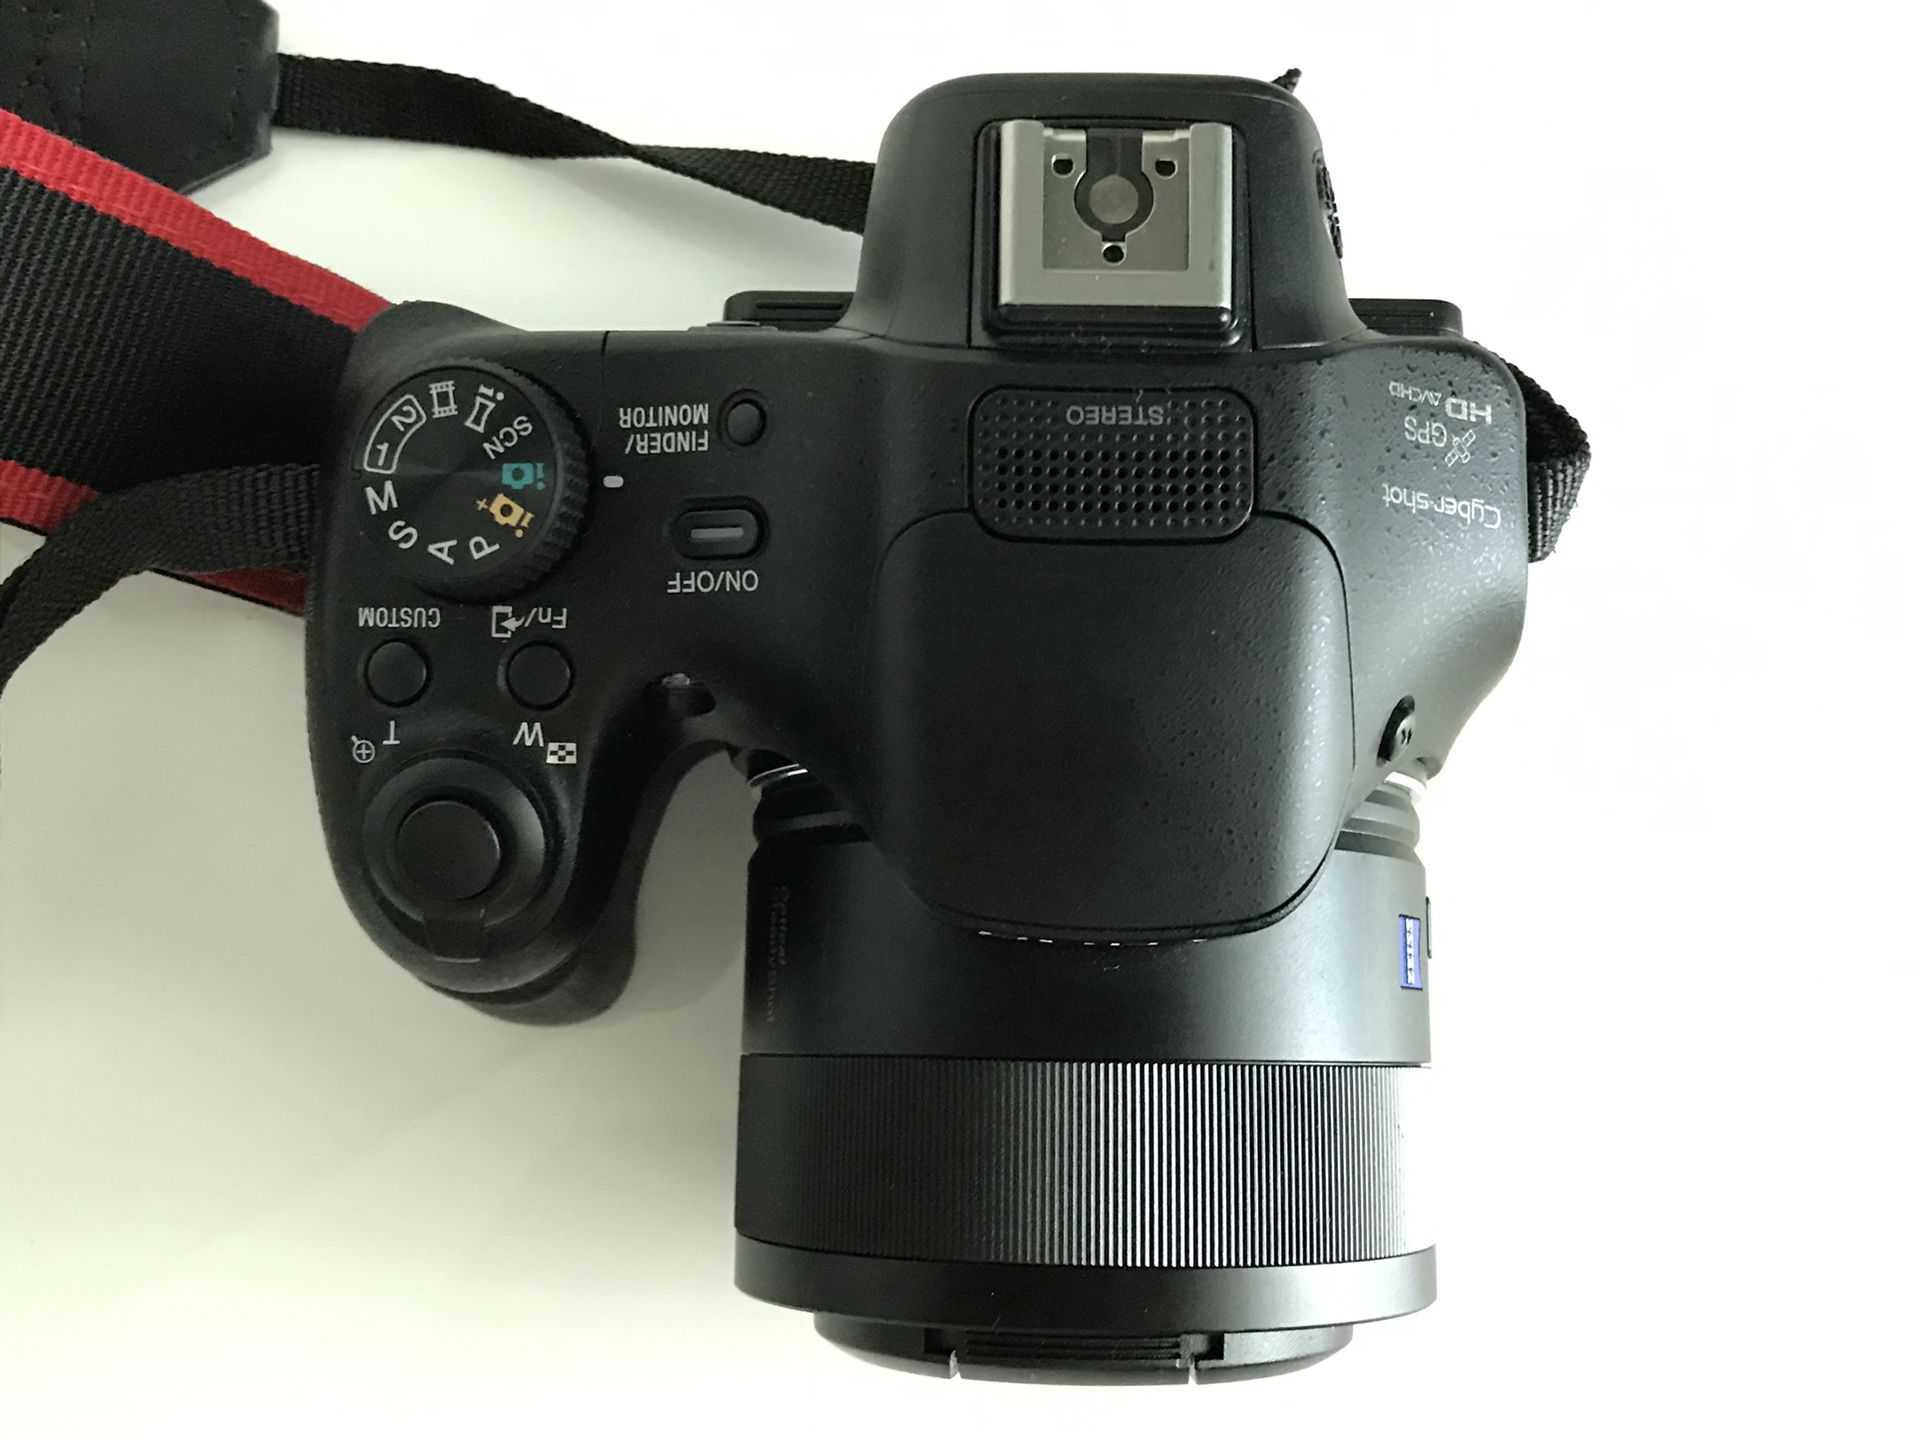 Sony CybeCamera Shot DSC-HX400V Wi-Fi Digital Camera Video